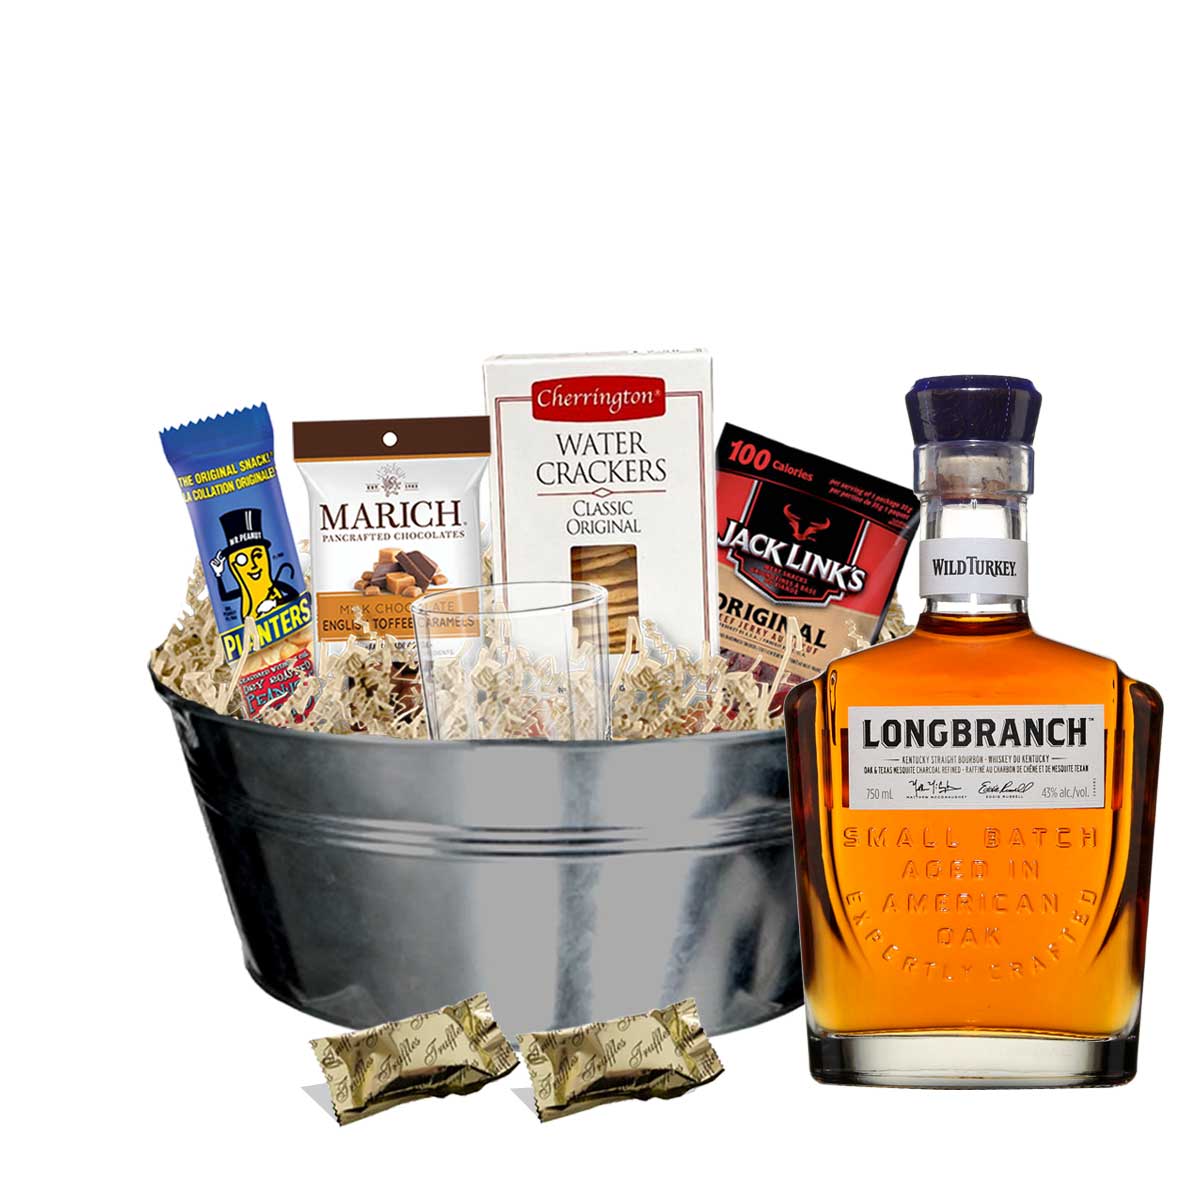 TAG Liquor Stores BC - Wild Turkey Longbranch Bourbon Whiskey 750ml Gift Basket